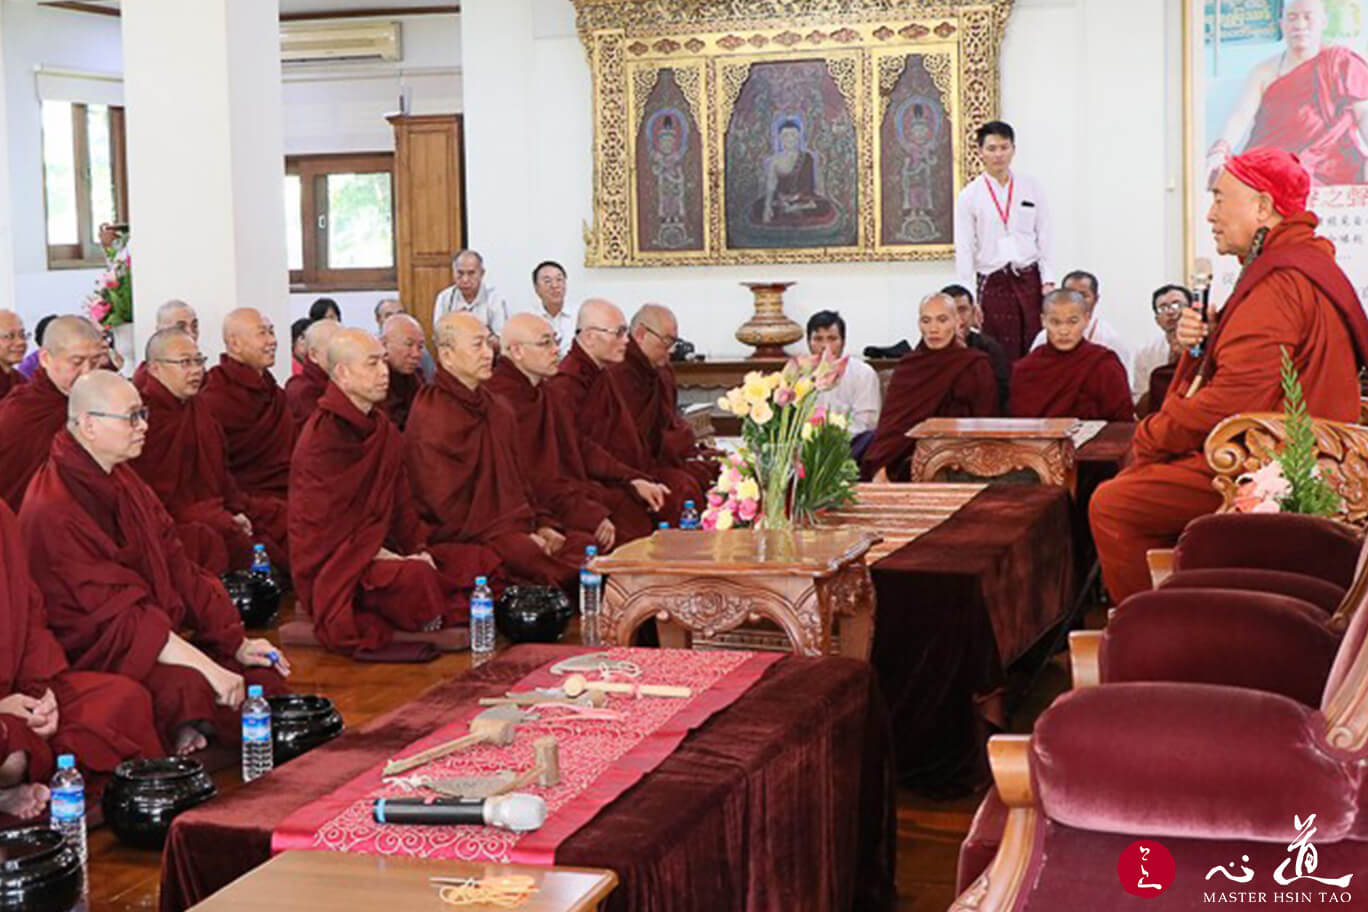 Monastic Experiential Program in Myanmar – Making Connection through Almround-MasterHsinTao